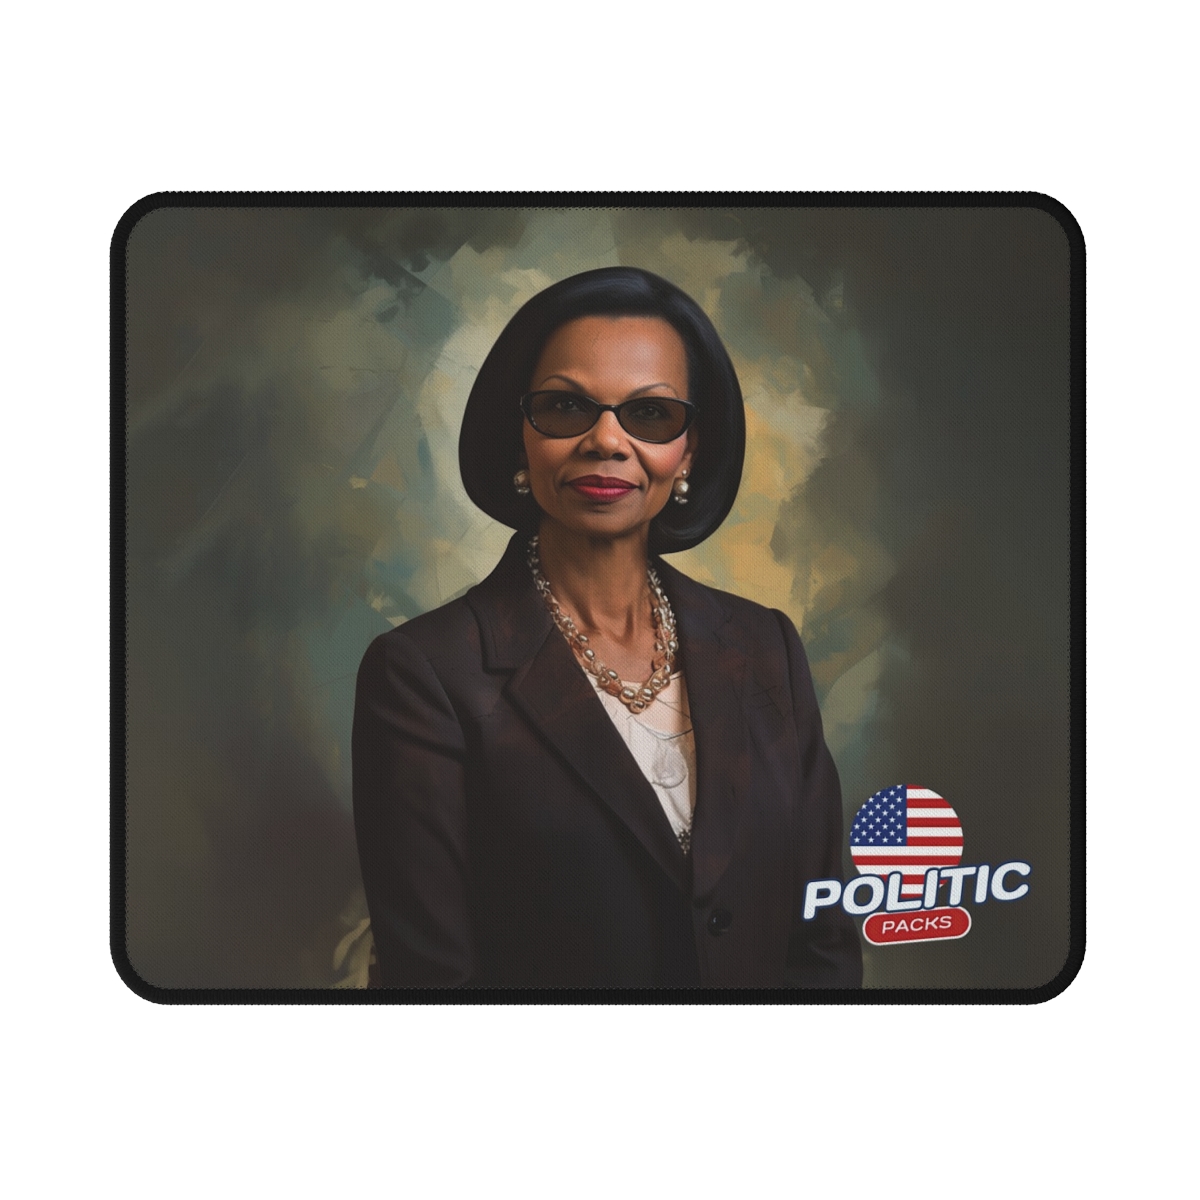 Condoleezza Rice Legacy Mouse Pad – Politic Packs Edition